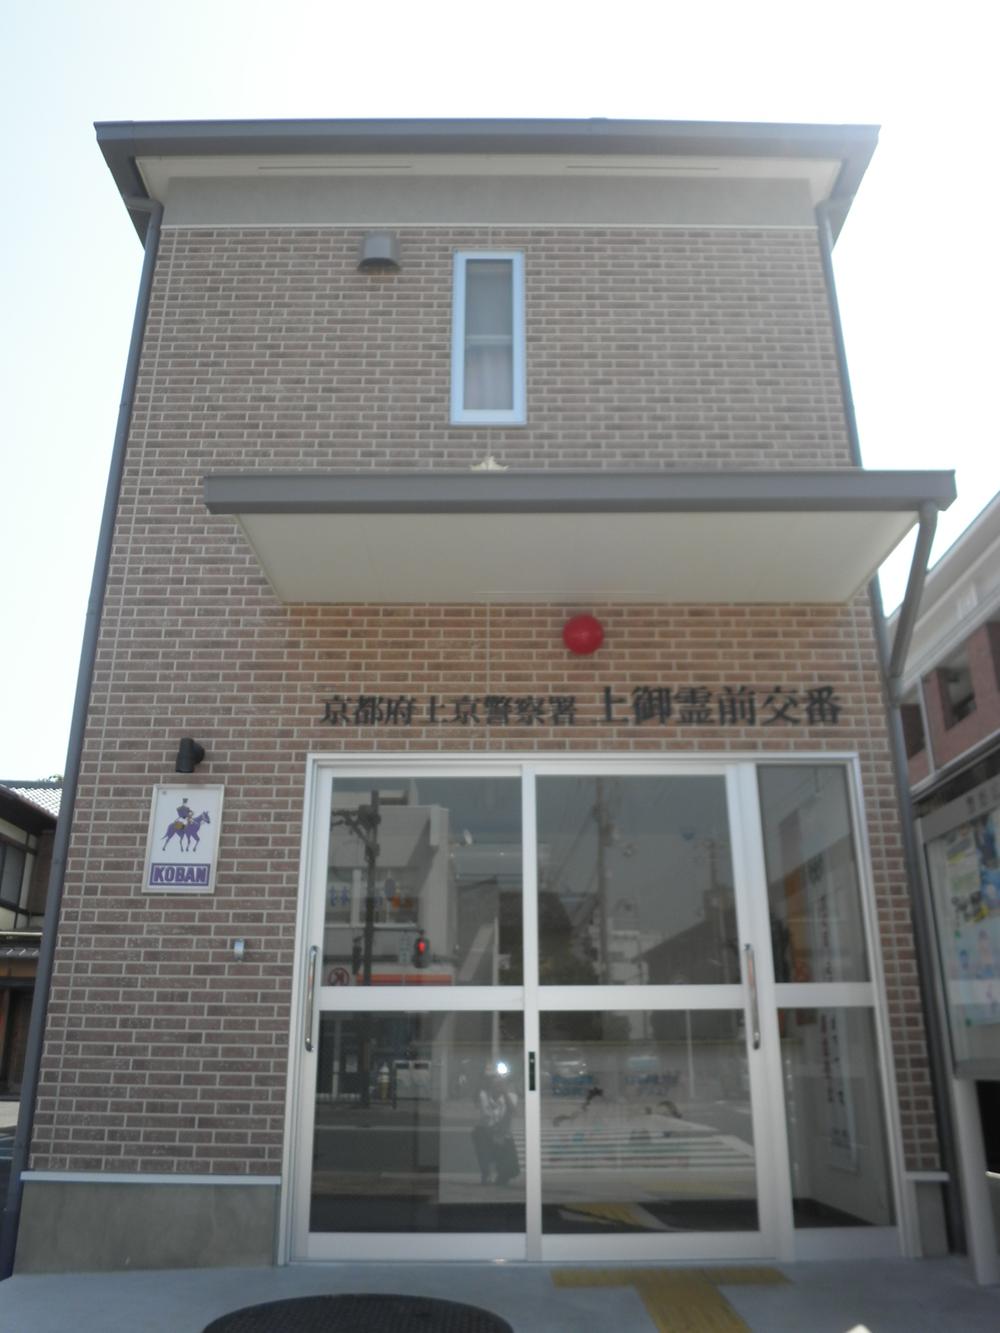 Police station ・ Police box. Kamigoryomae until alternating 310m